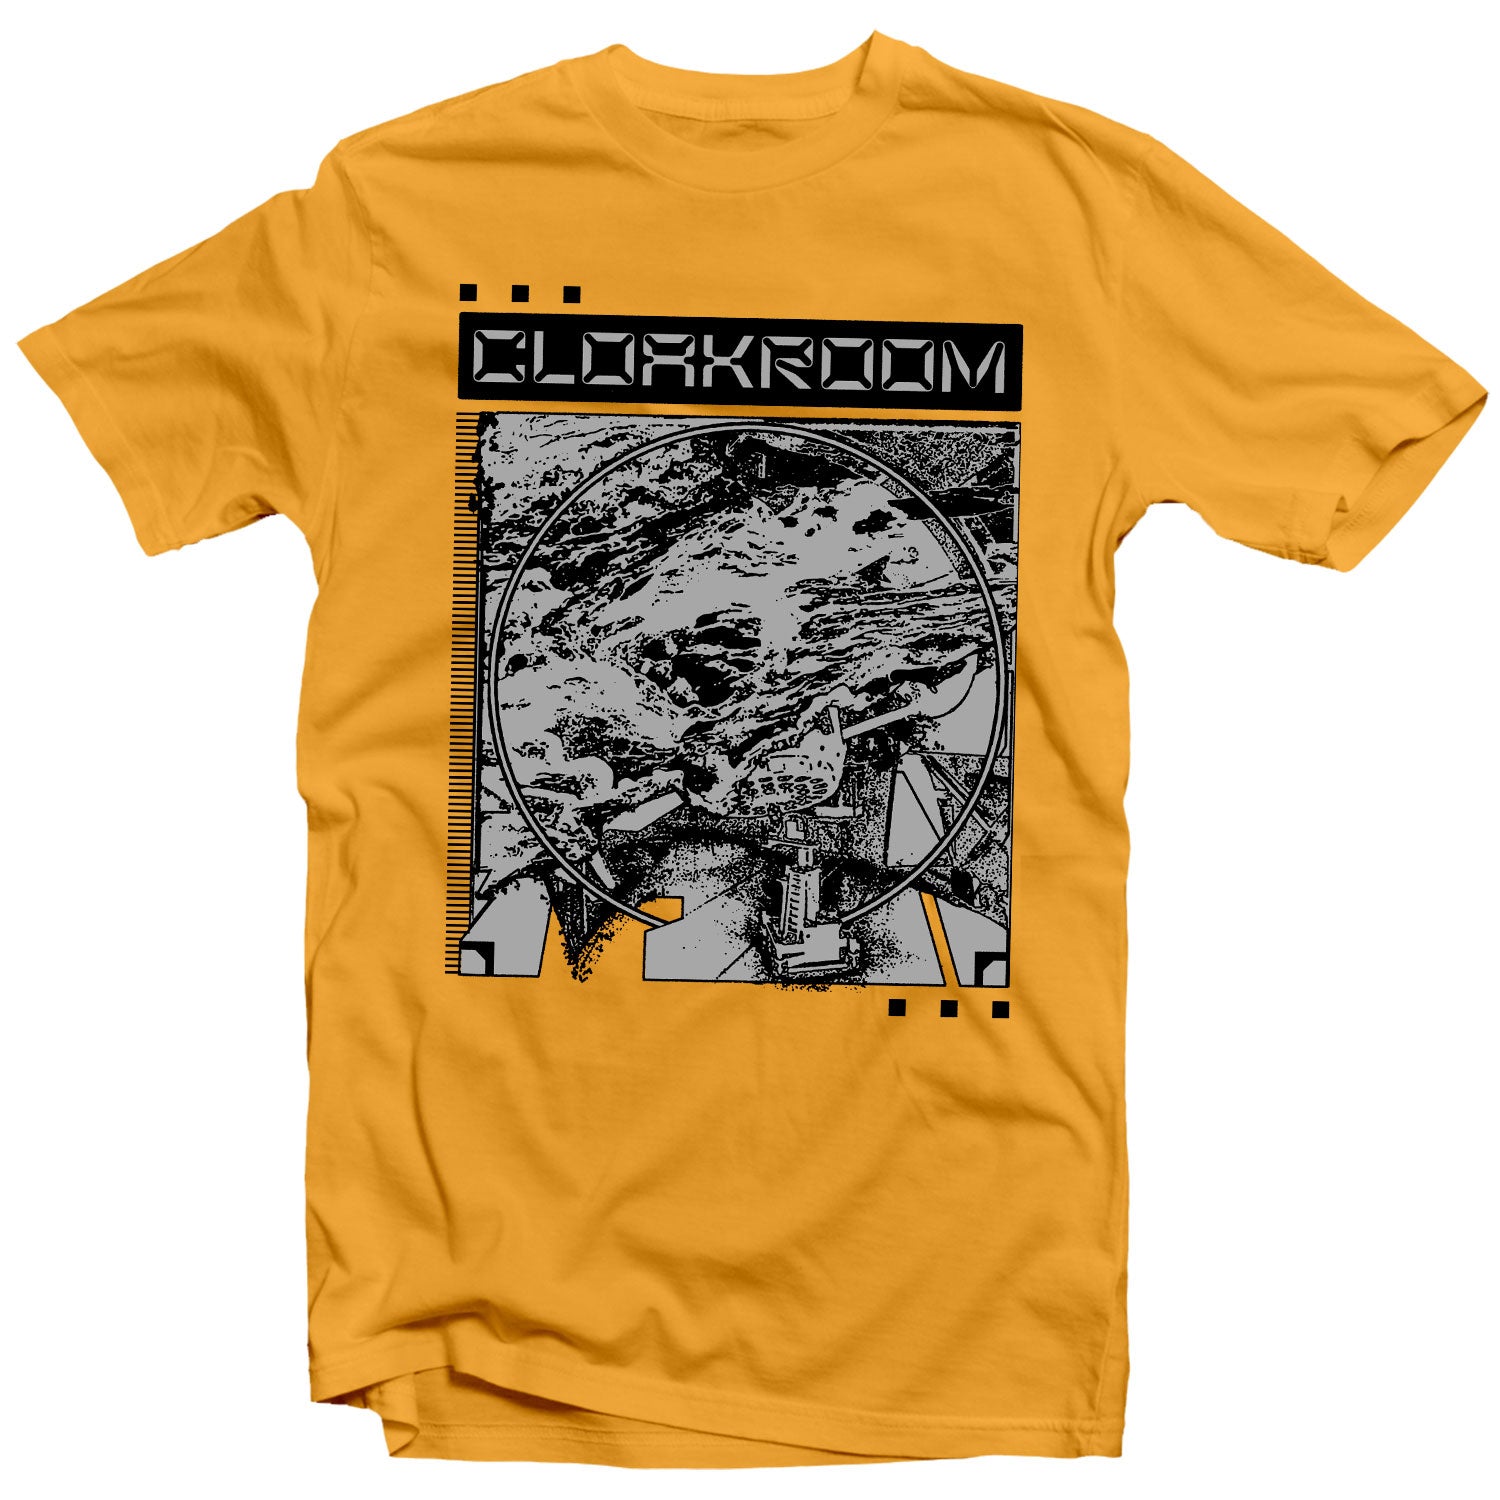 Cloakroom "Dissolution Wave" T-Shirt